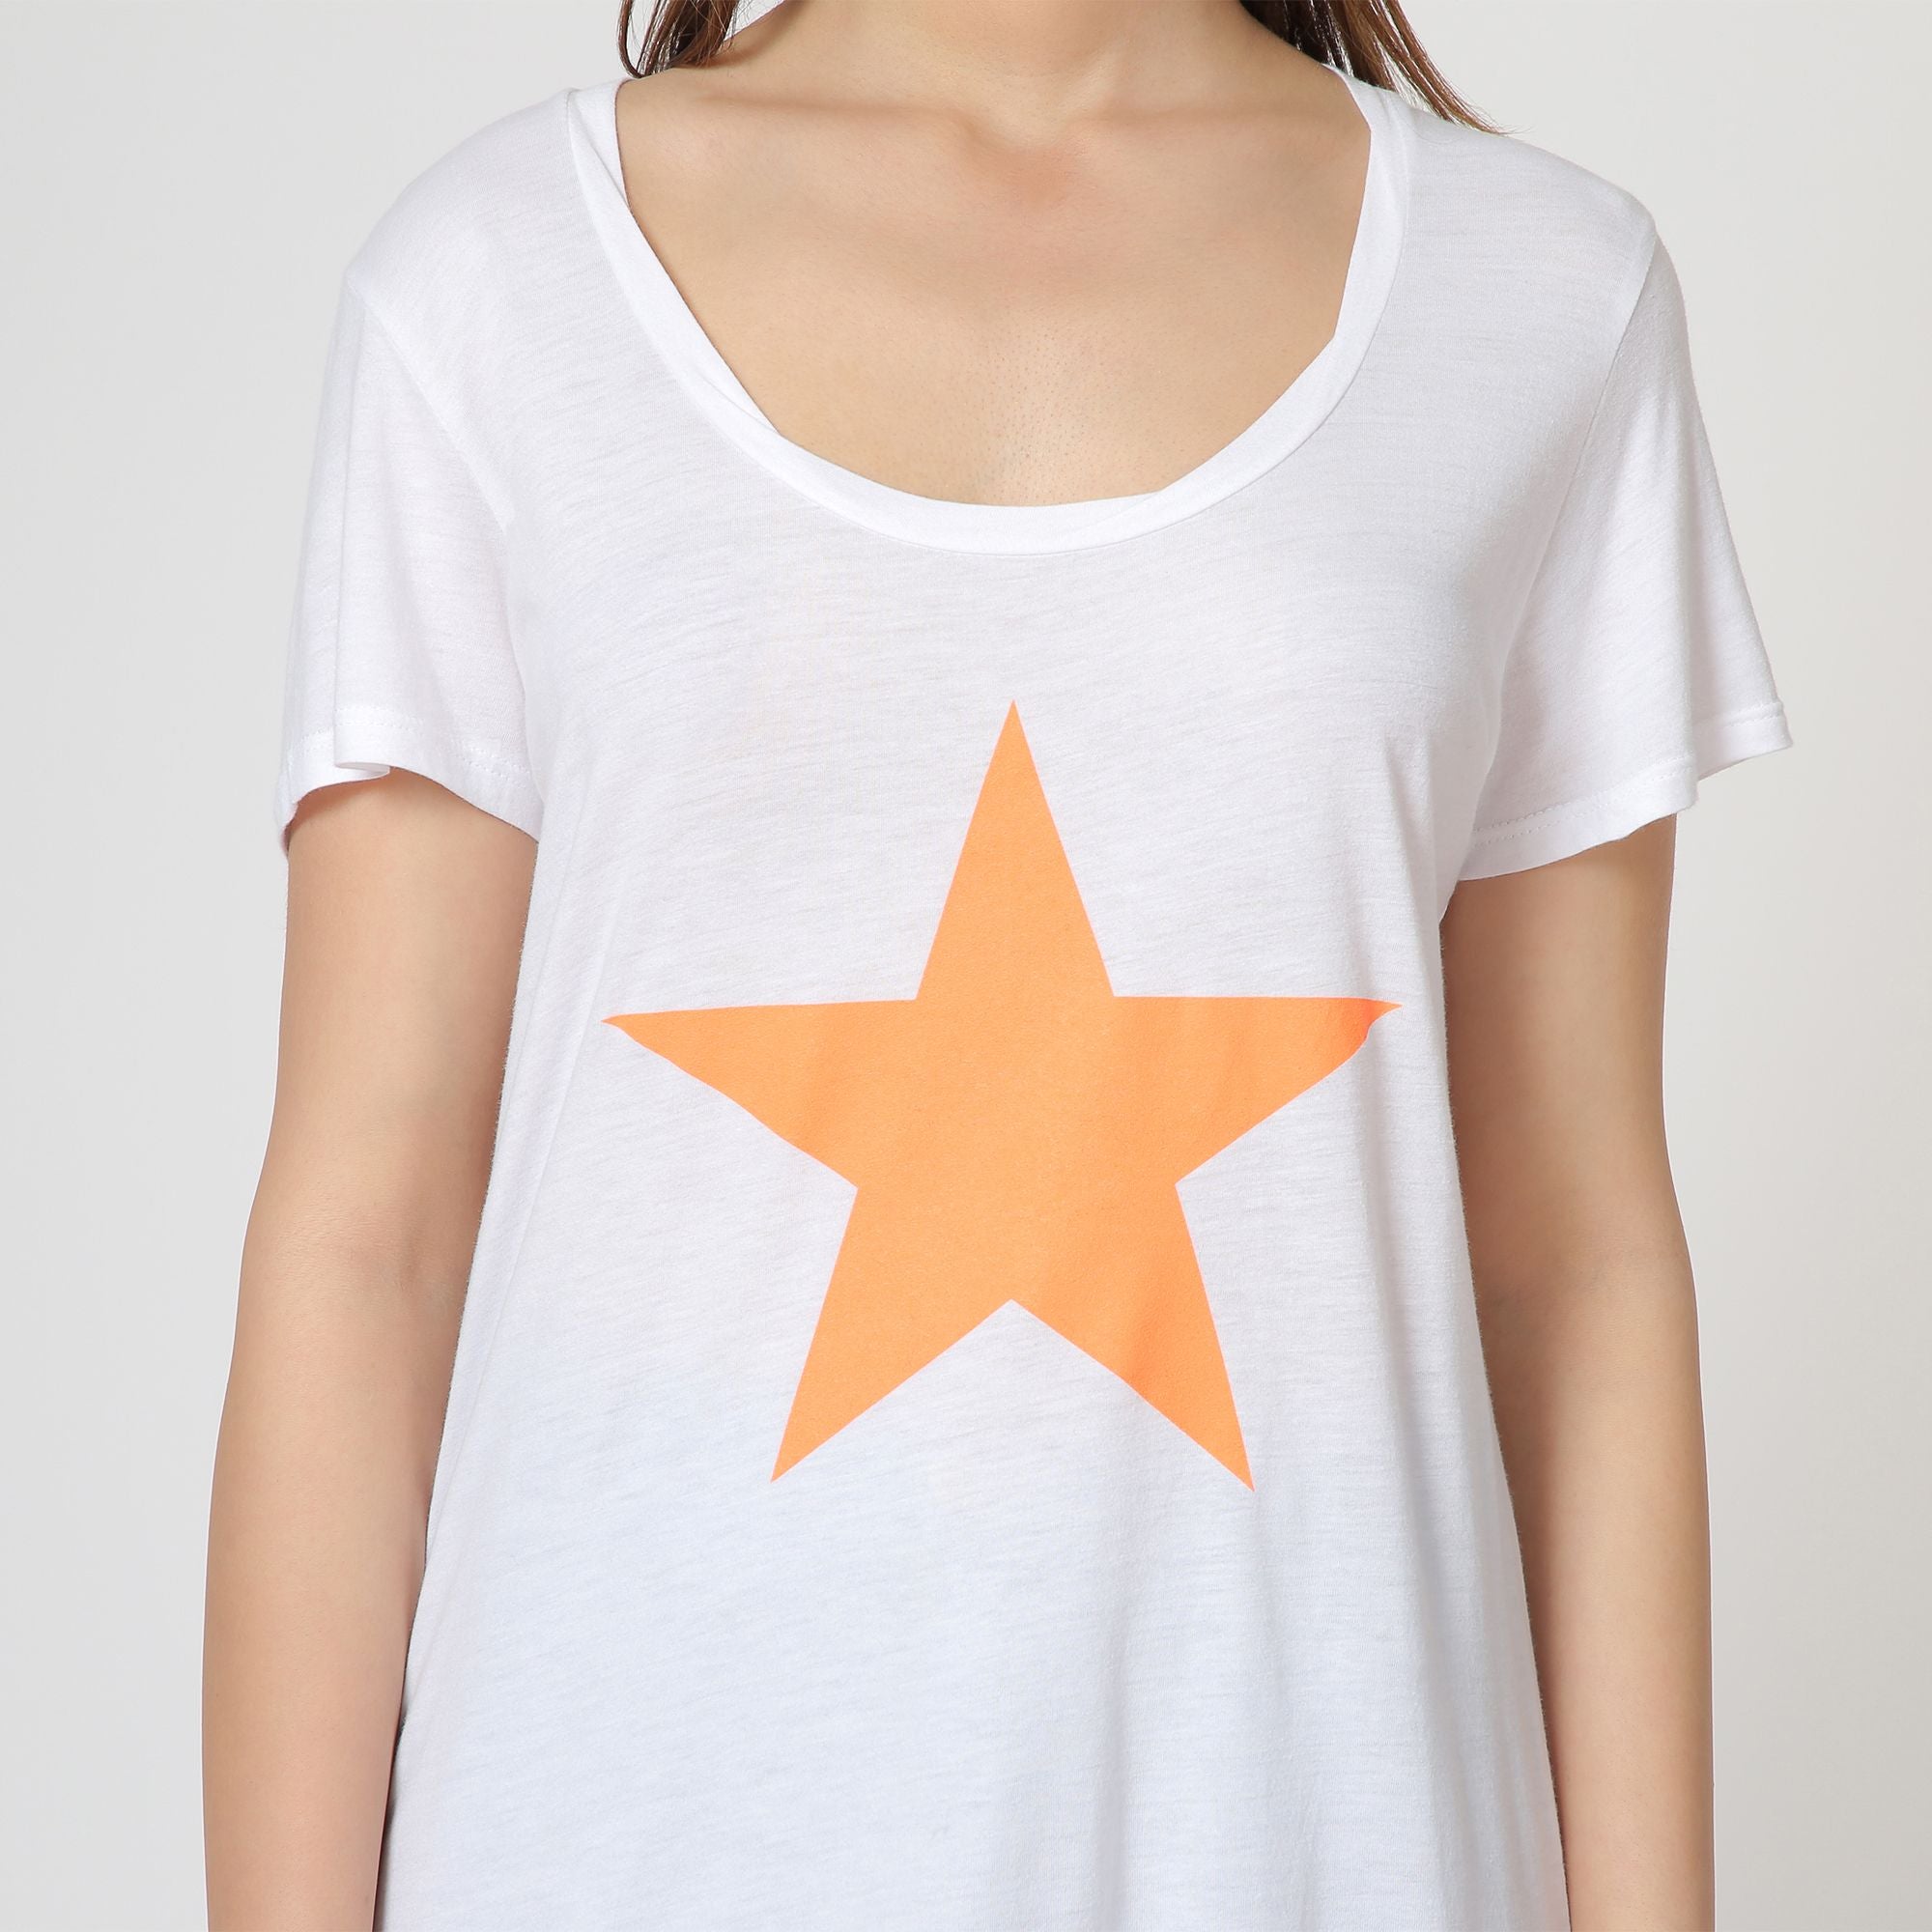 Camiseta manga corta blanca estrella naranja